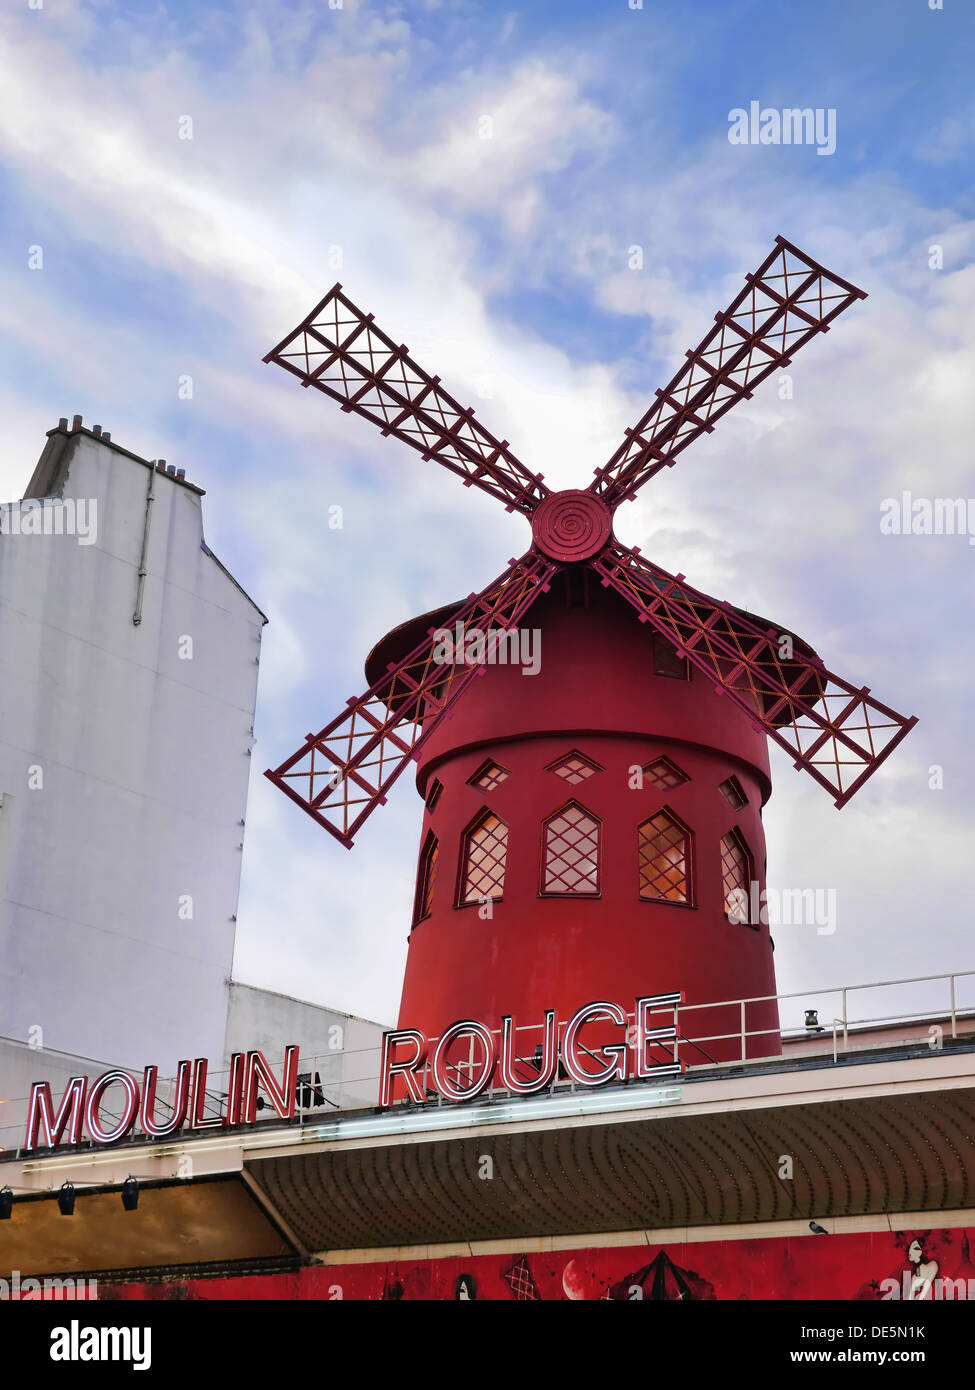 Das berühmte Moulin Rouge Gebäude in Paris, Frankreich Stockfoto